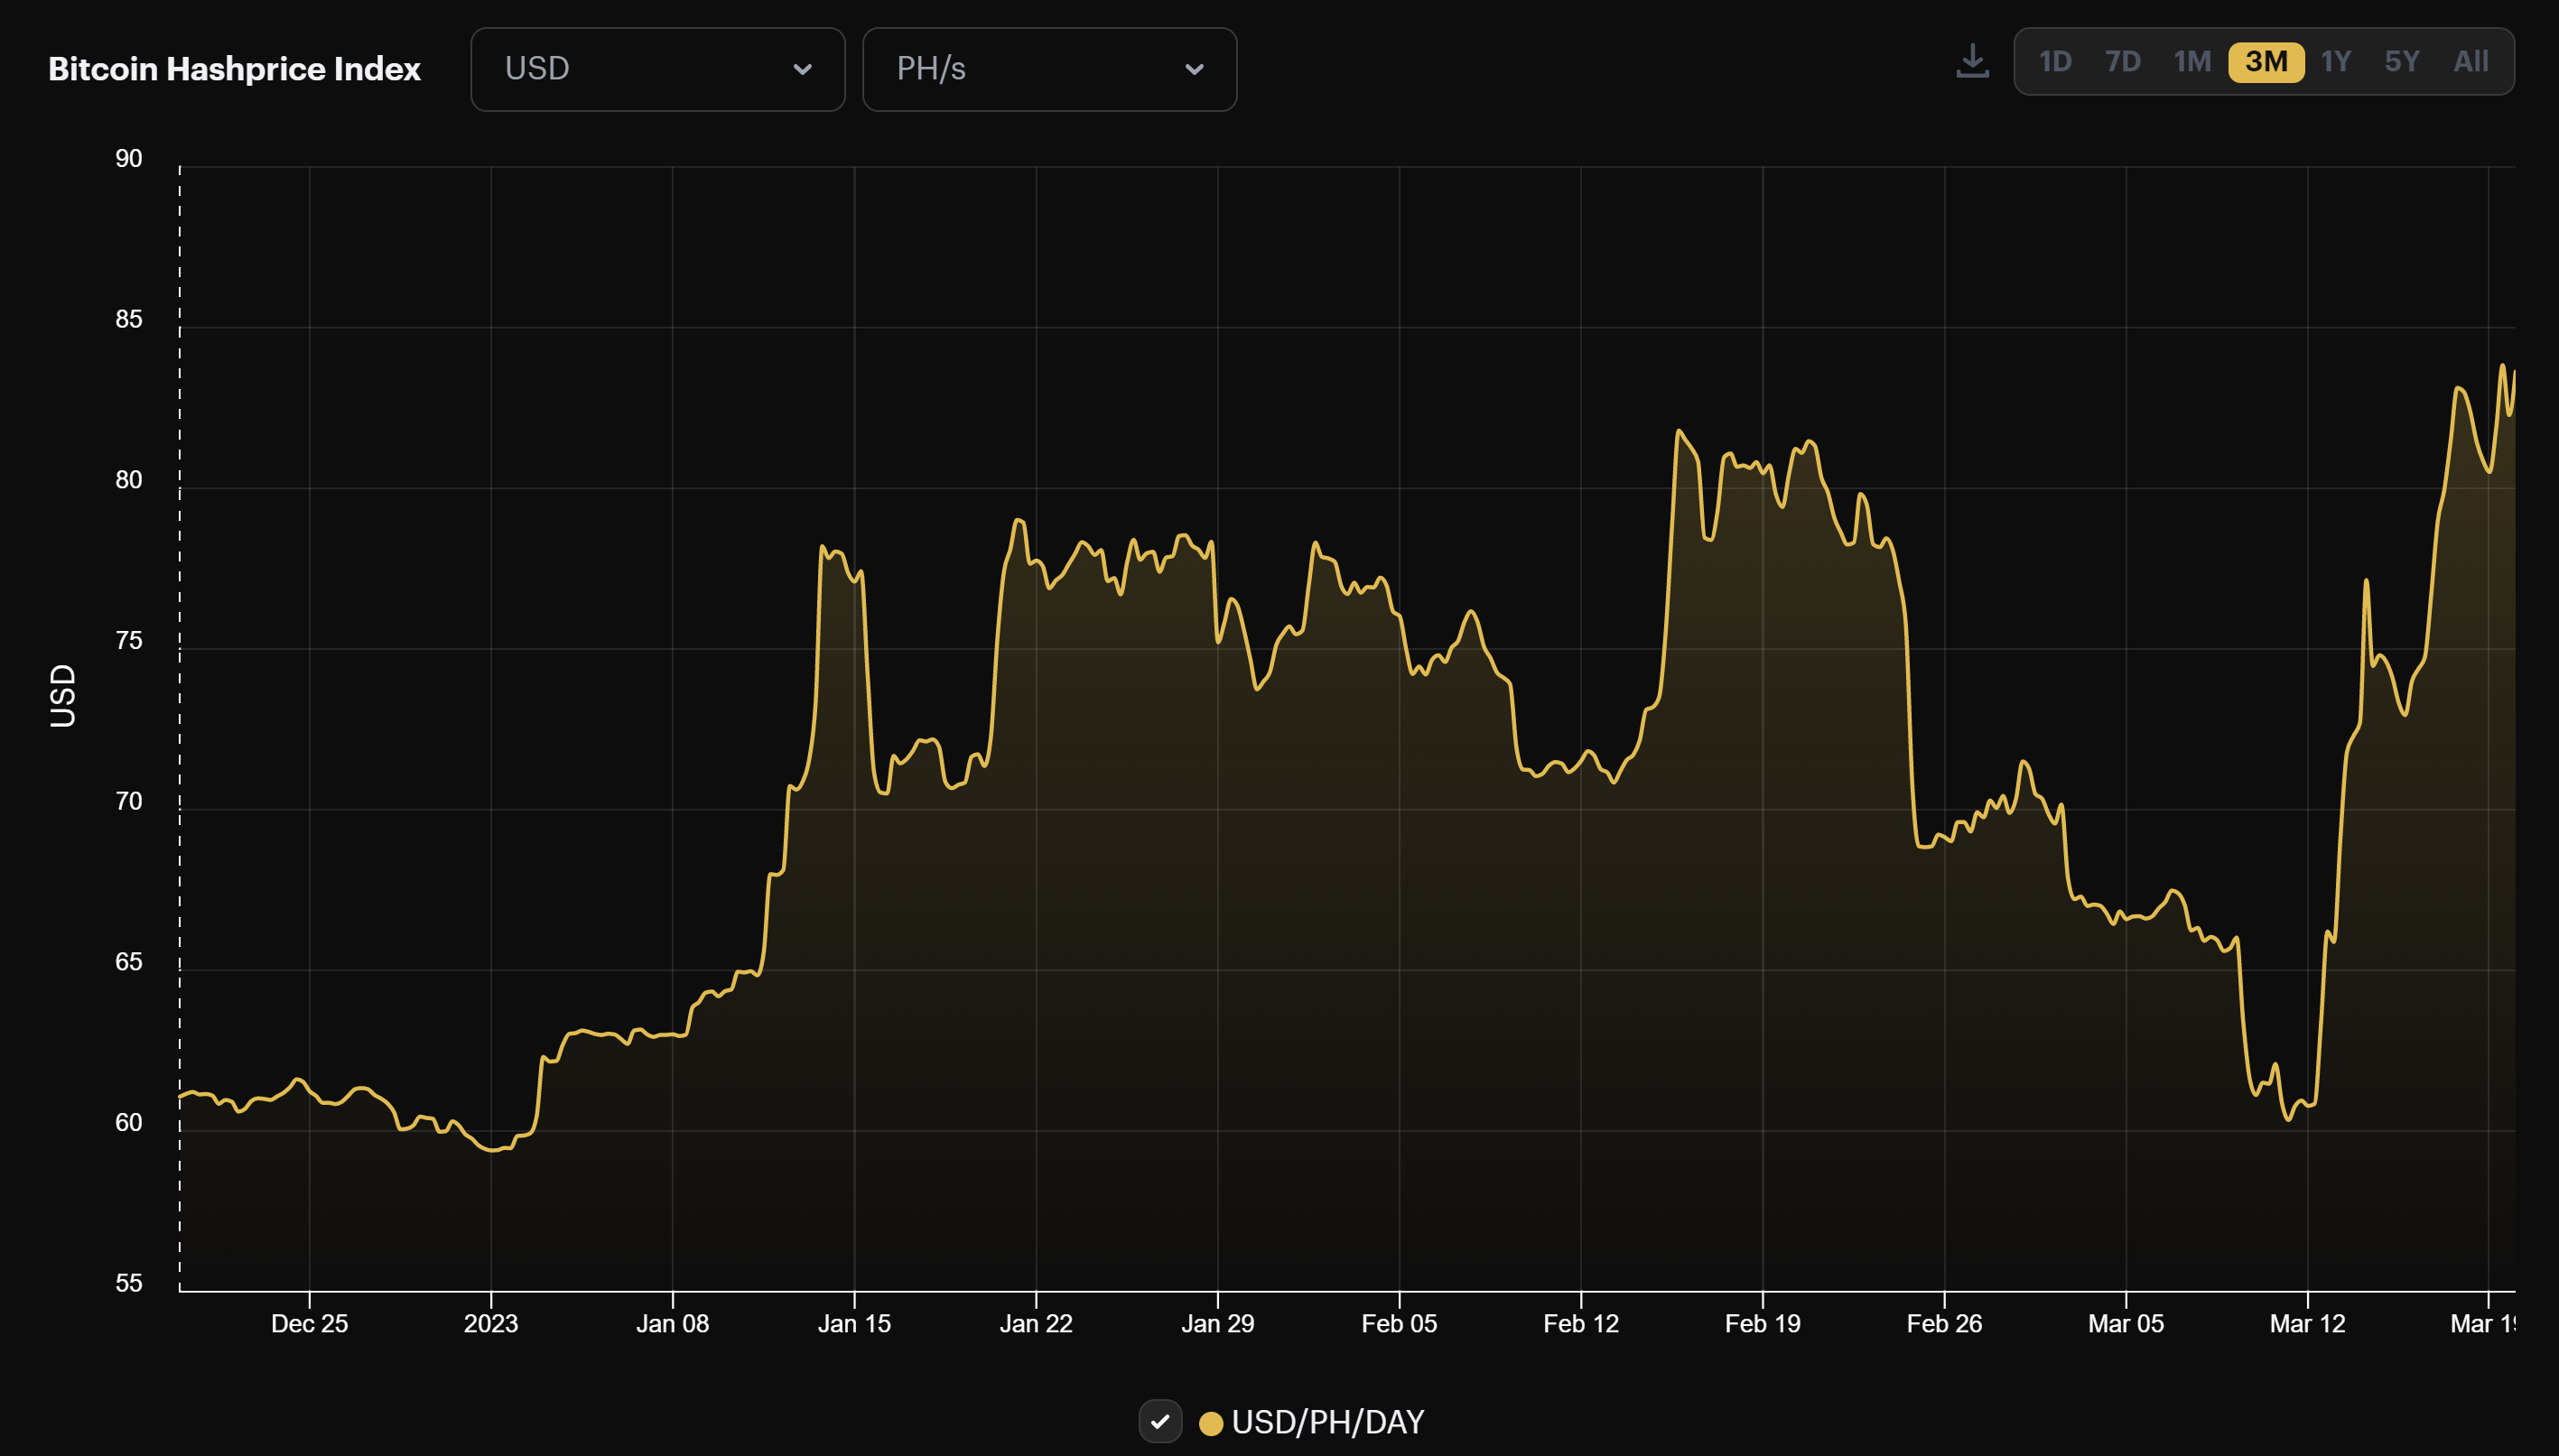 Bitcoin hashprice 3 month view | Source: Hashrate Index